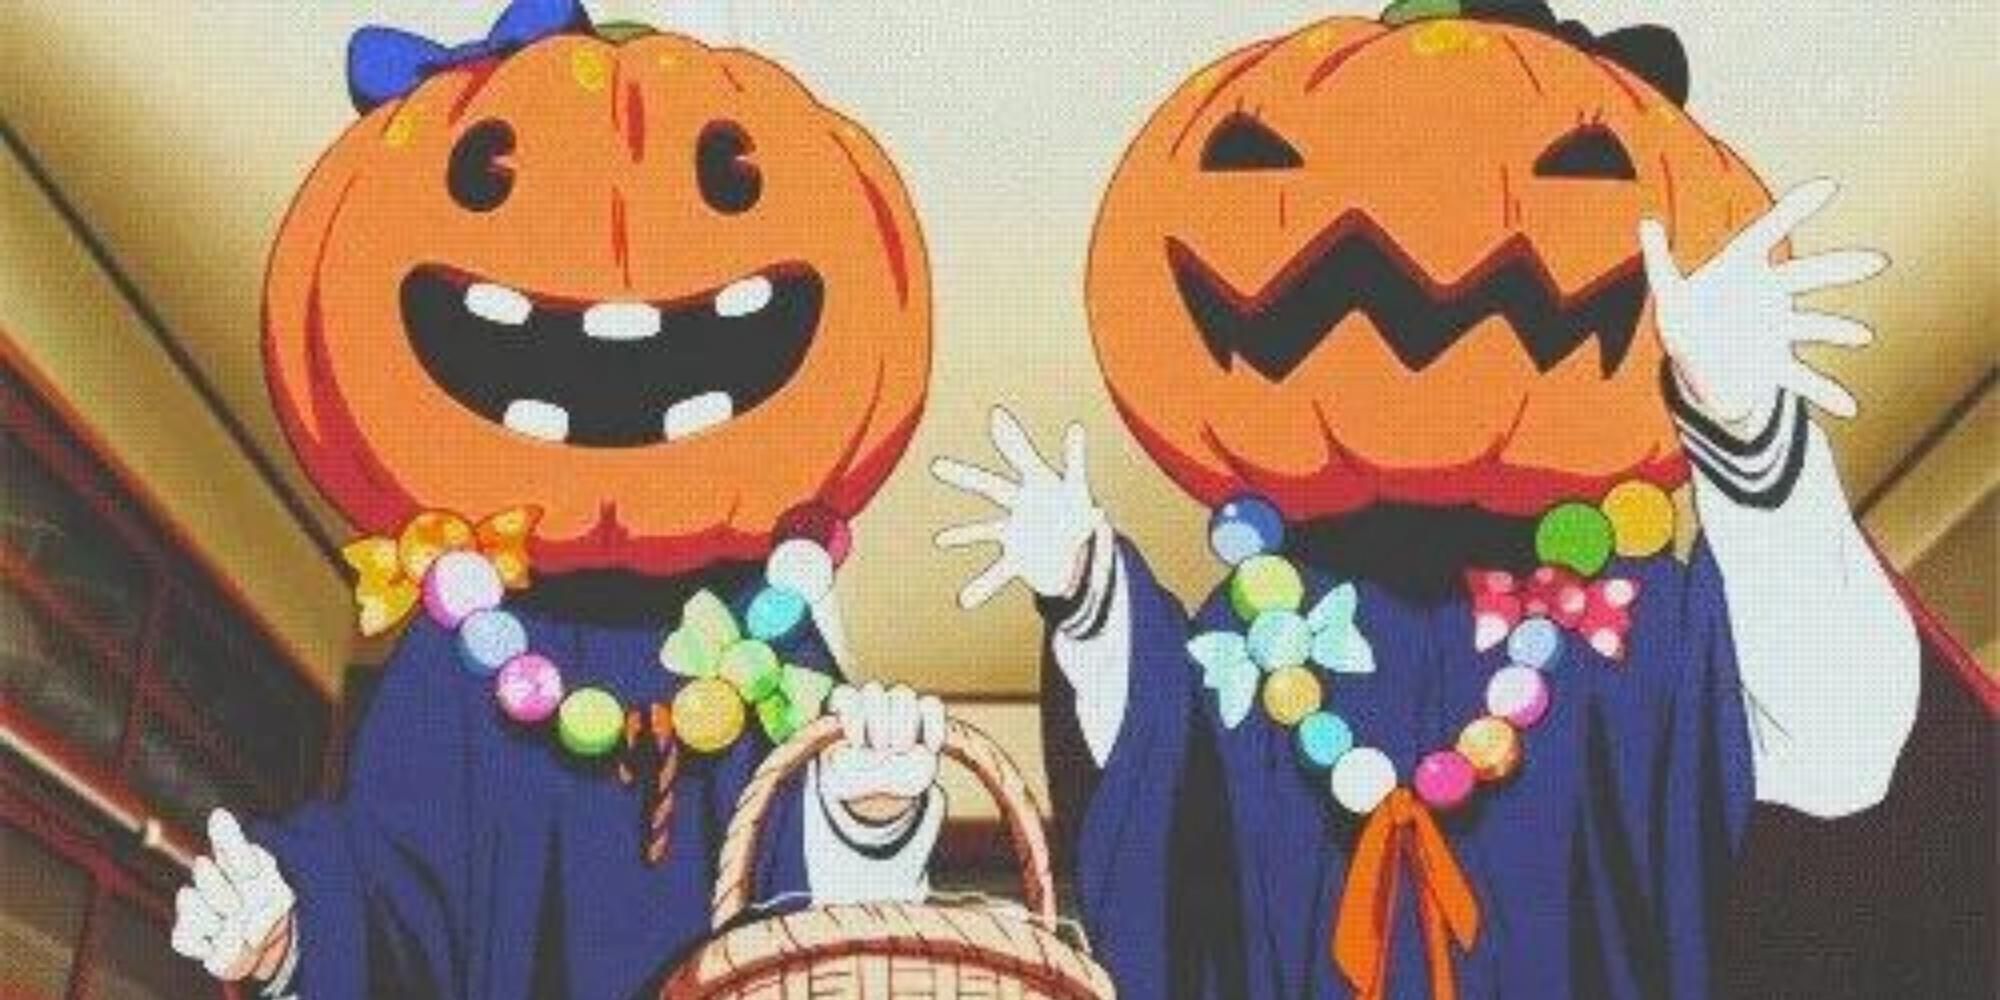 pumpkin costumes for Halloween in Hyouka